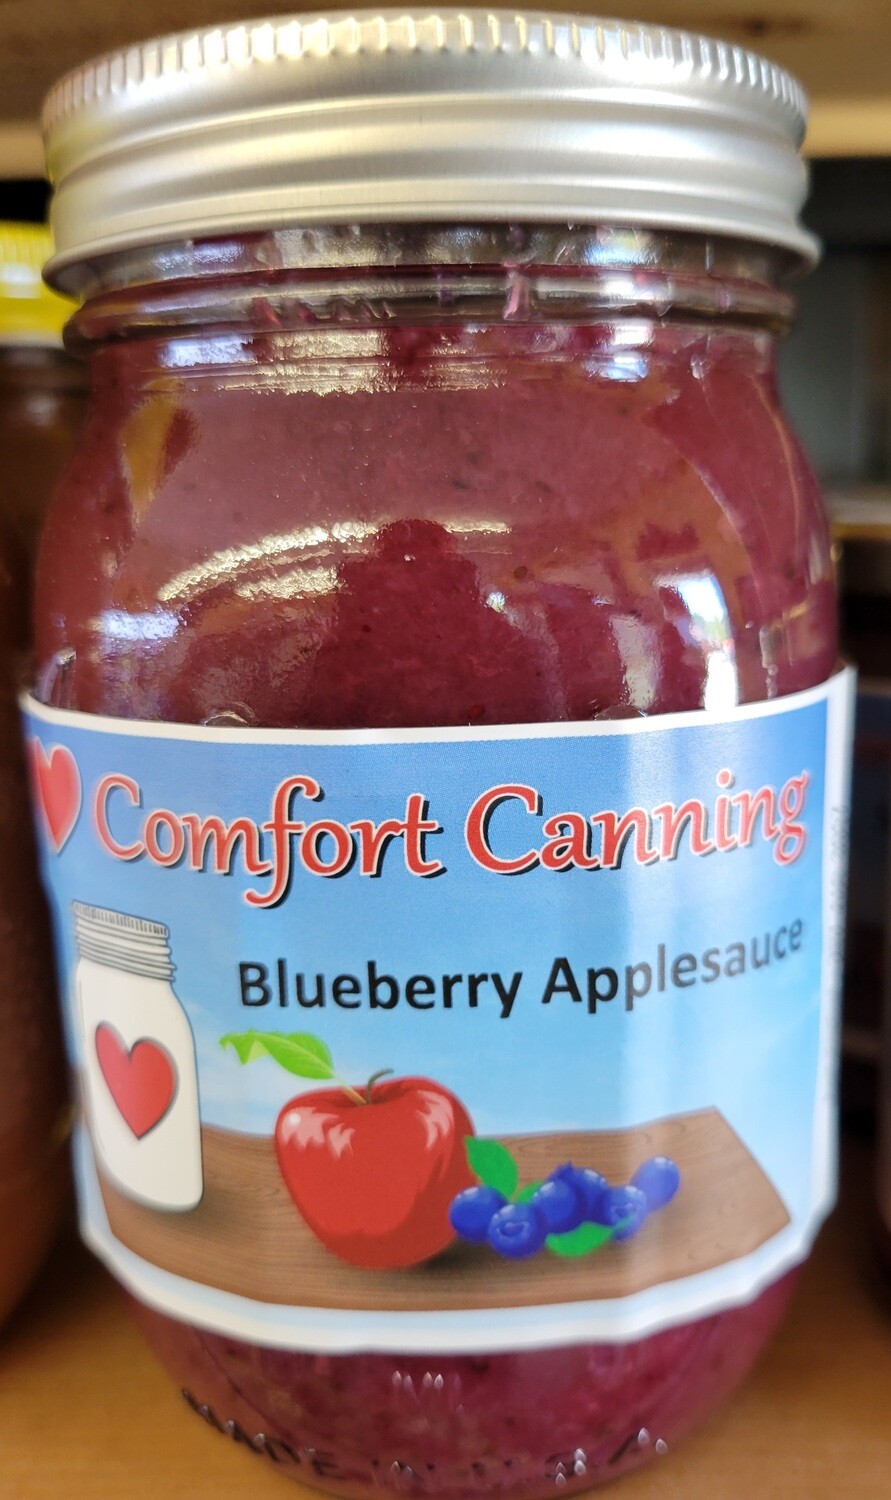 Comfort Canning - Blueberry Applesauce